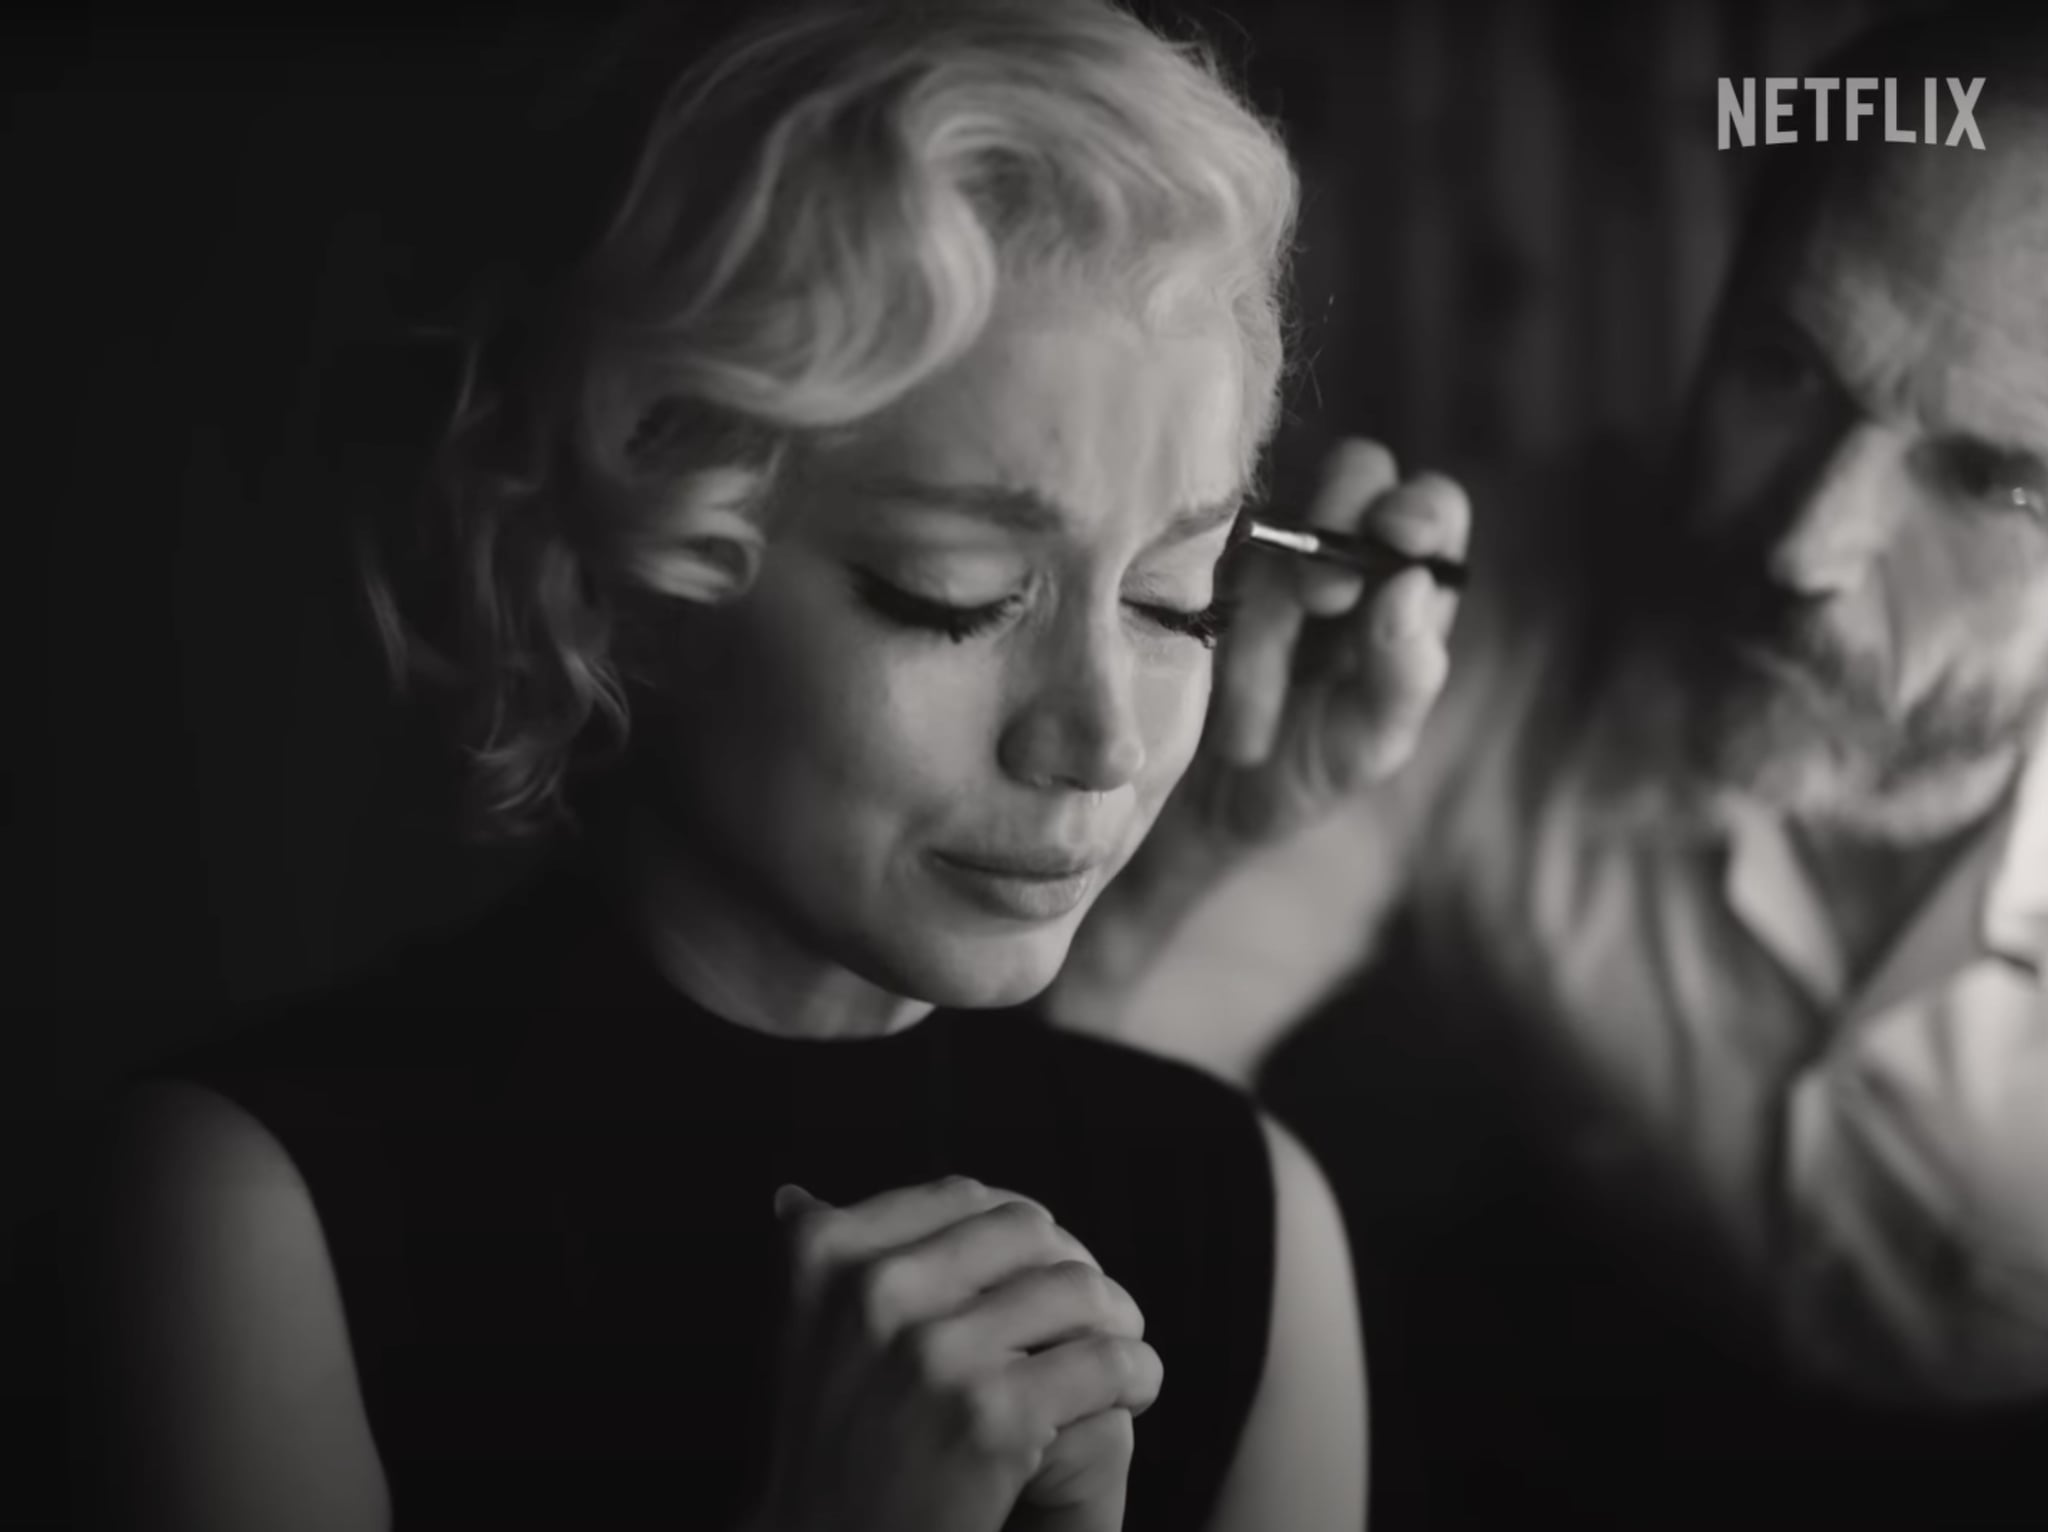 Blonde: Ana de Armas' resemblance to Marilyn Monroe is uncanny in